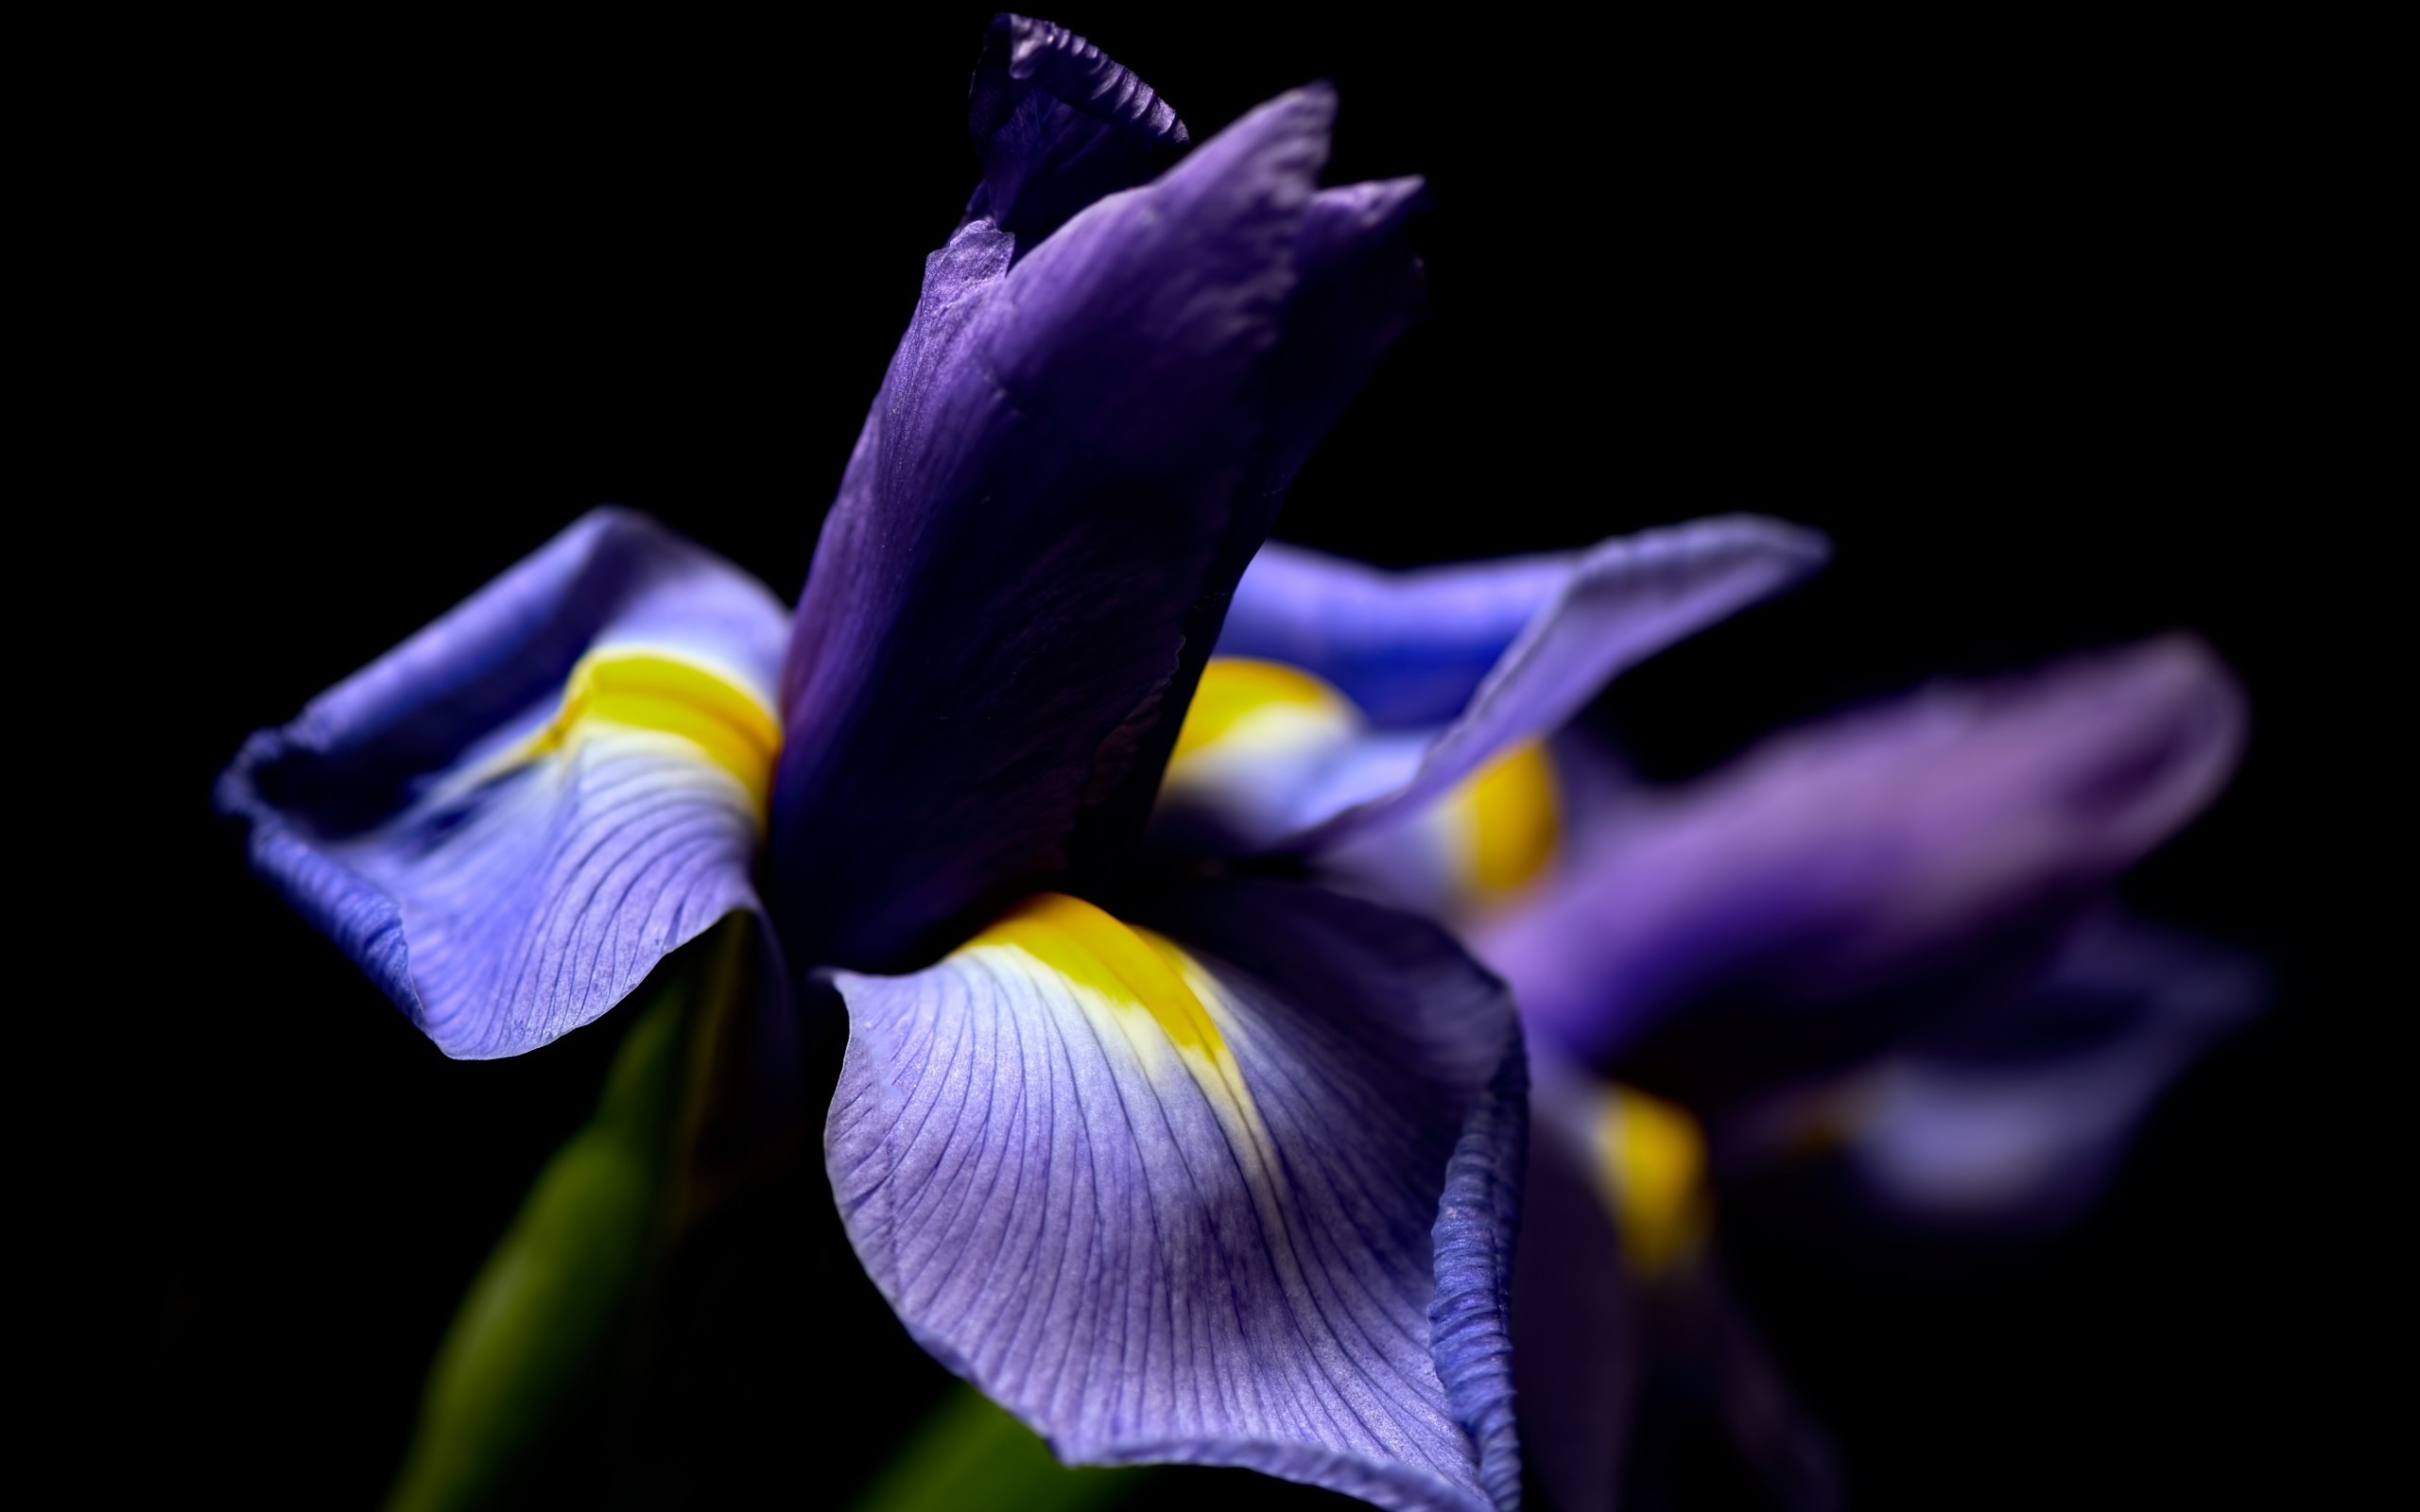 Black iris wallpaper, Mysterious allure, Dark beauty, Striking contrast, 2560x1600 HD Desktop